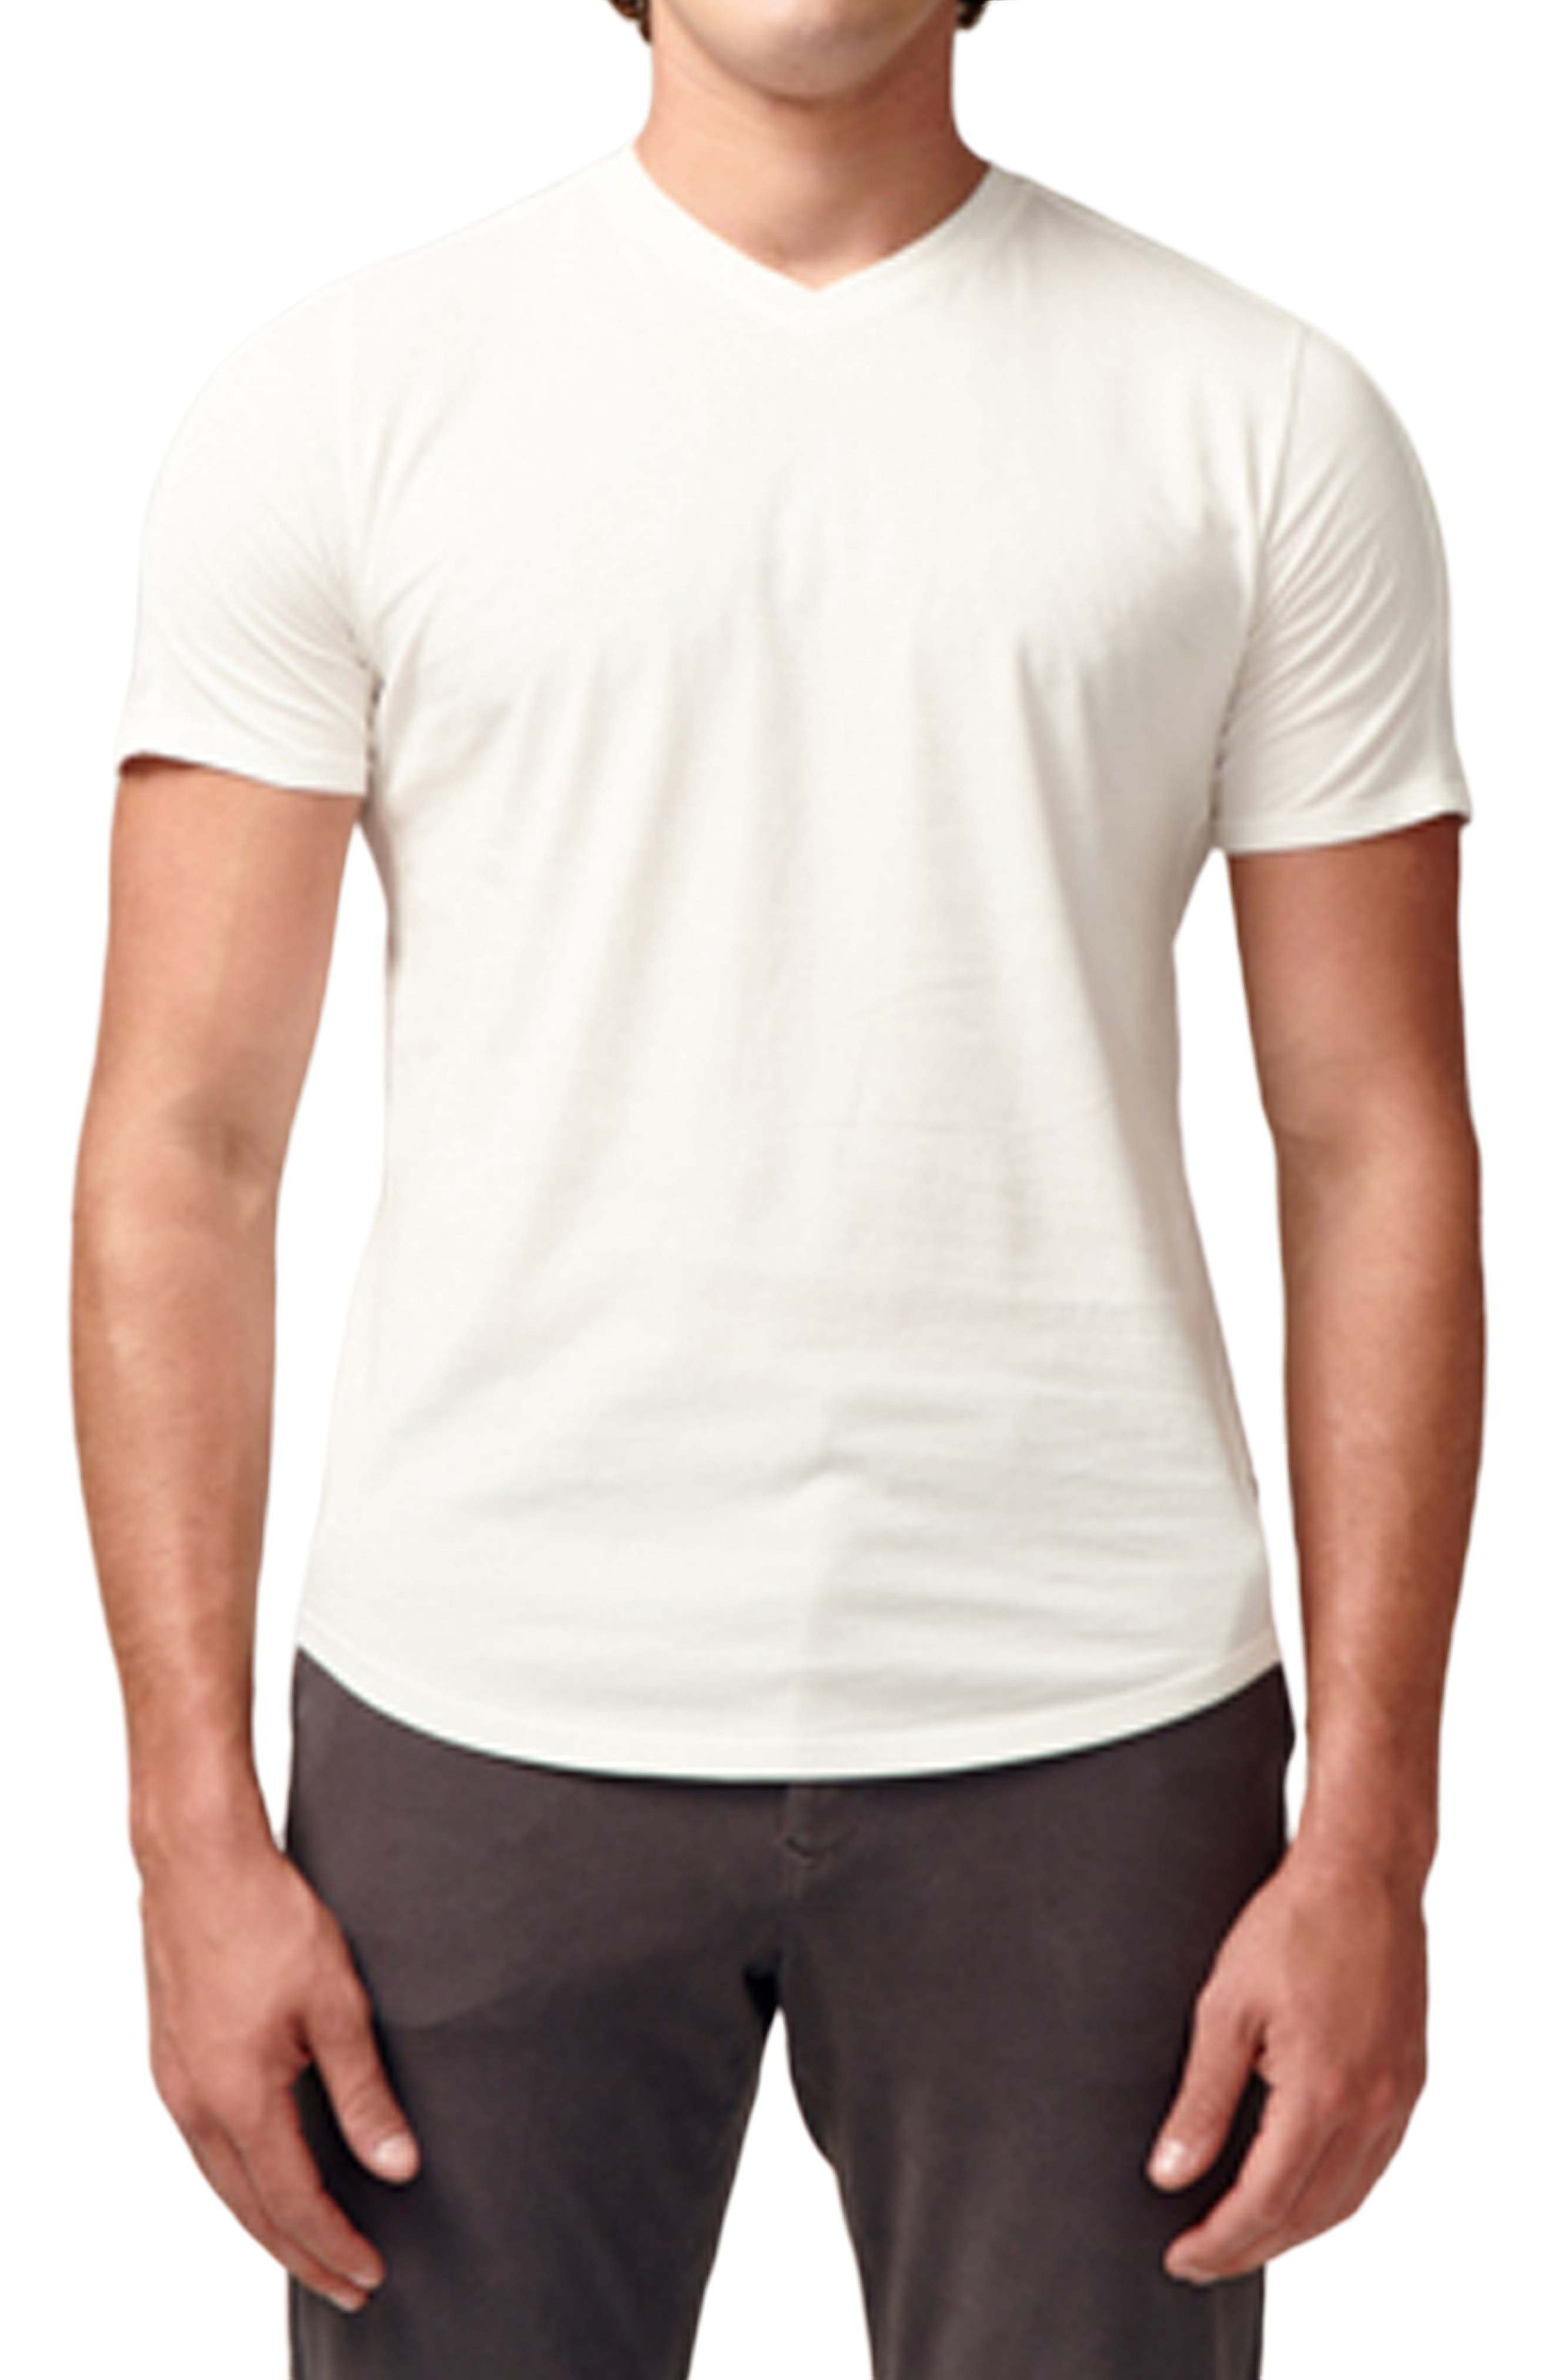 Fieer Mens Silm Short-Sleeve Oversize Floral Spring Tshirt Shirt 